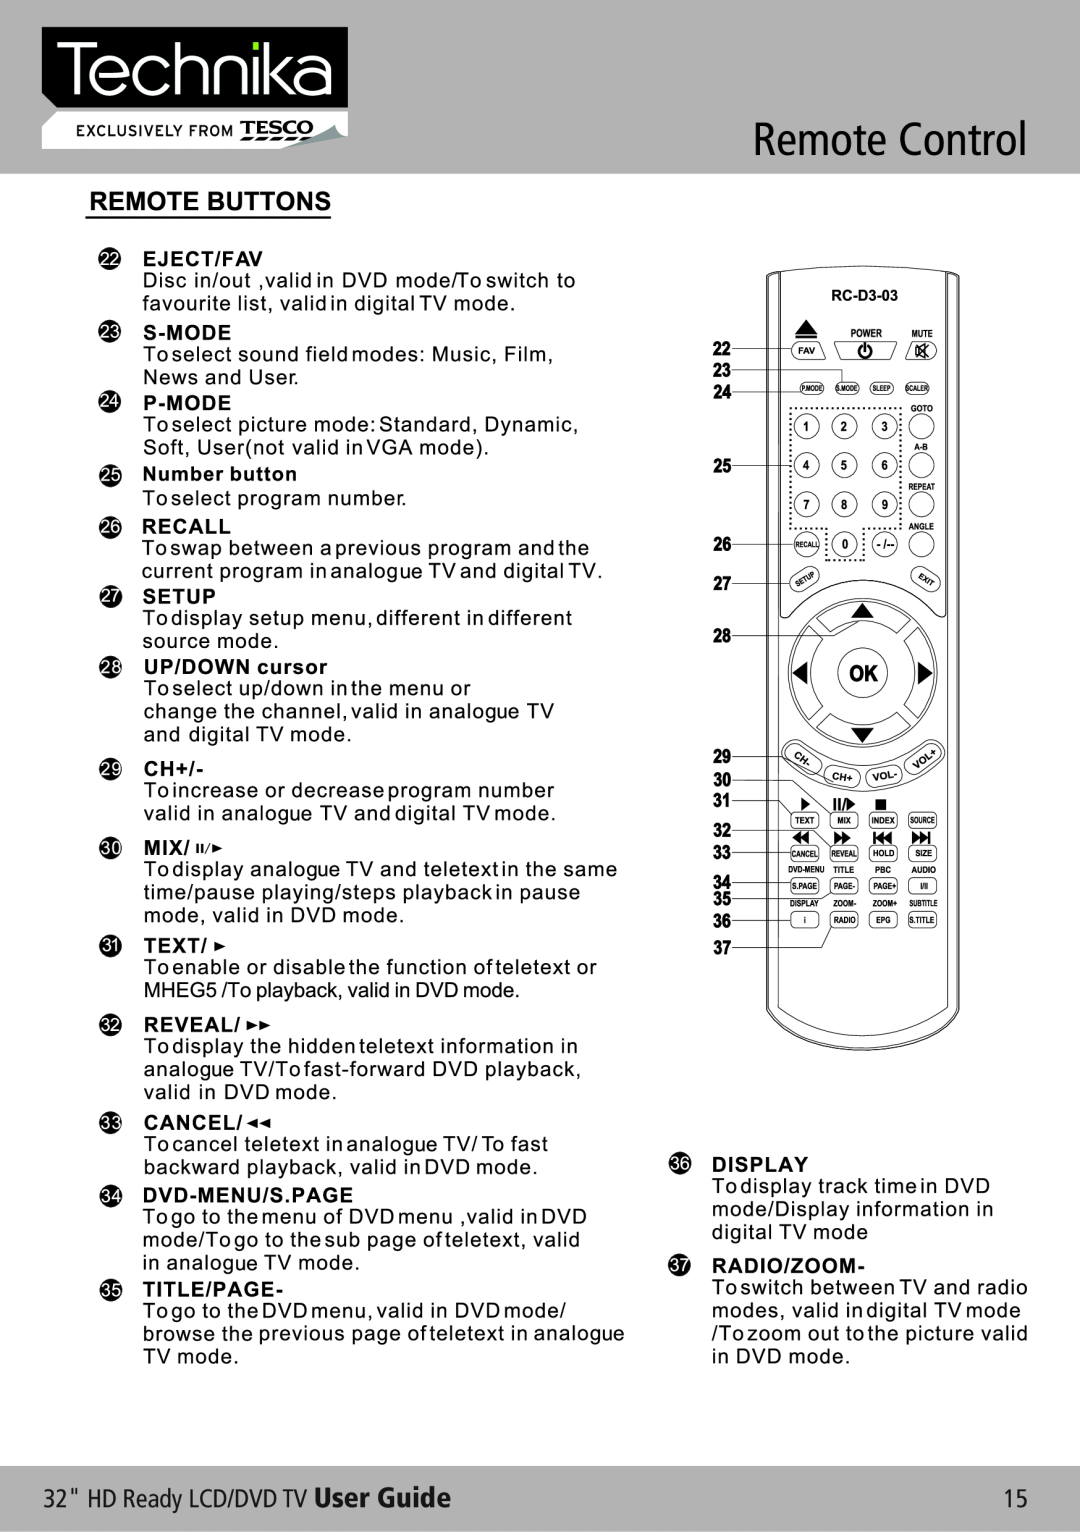 Technika 32-612 manual HD Ready LCD/DVD TV User Guide 